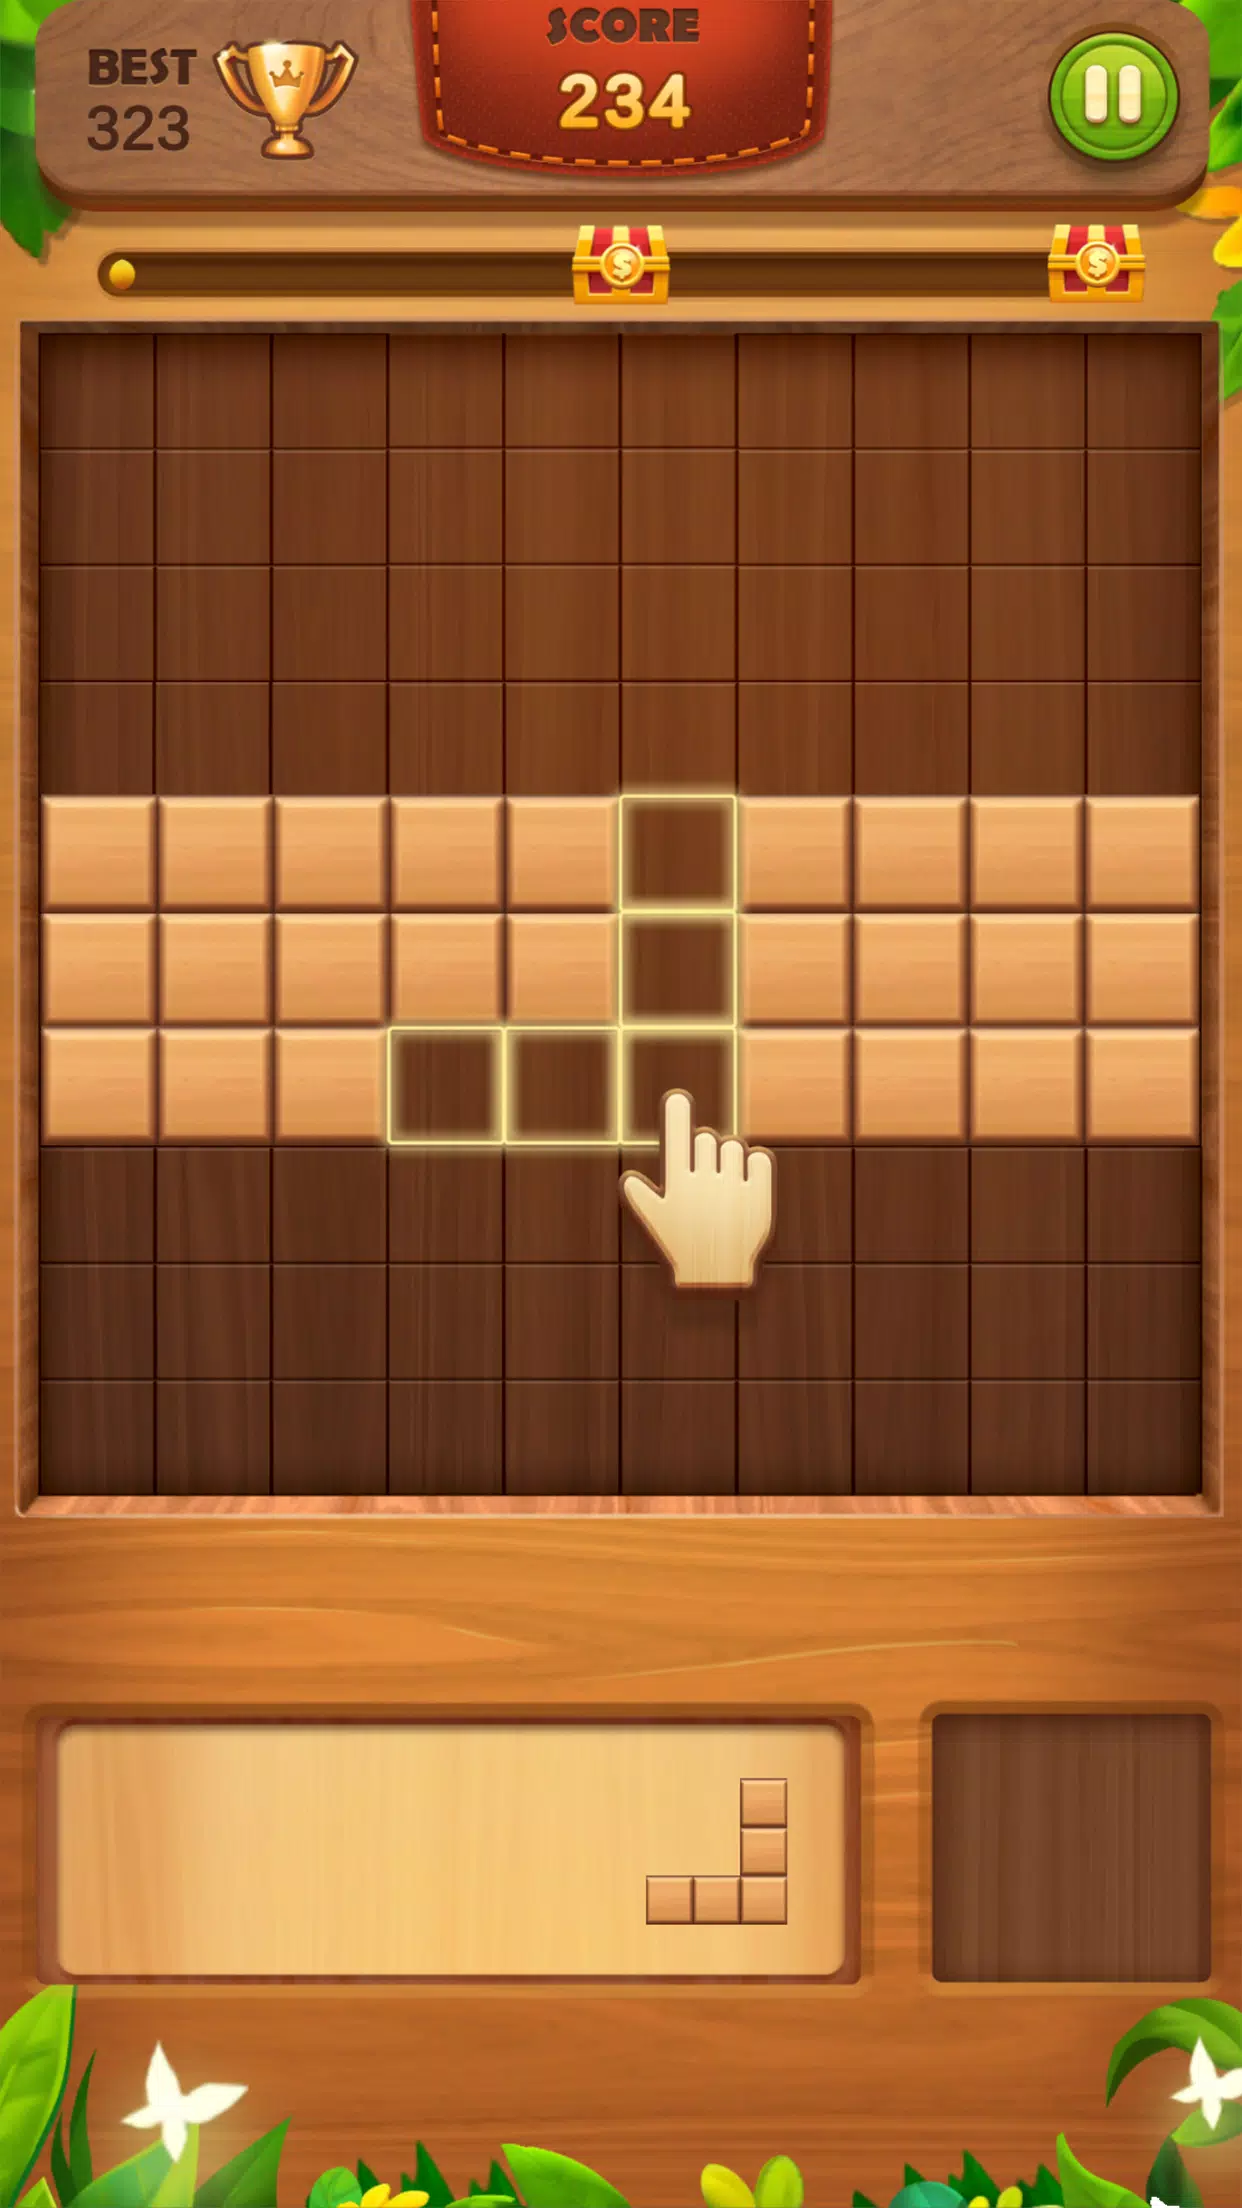 Block Puzzle-Wood Sudoku Game na App Store